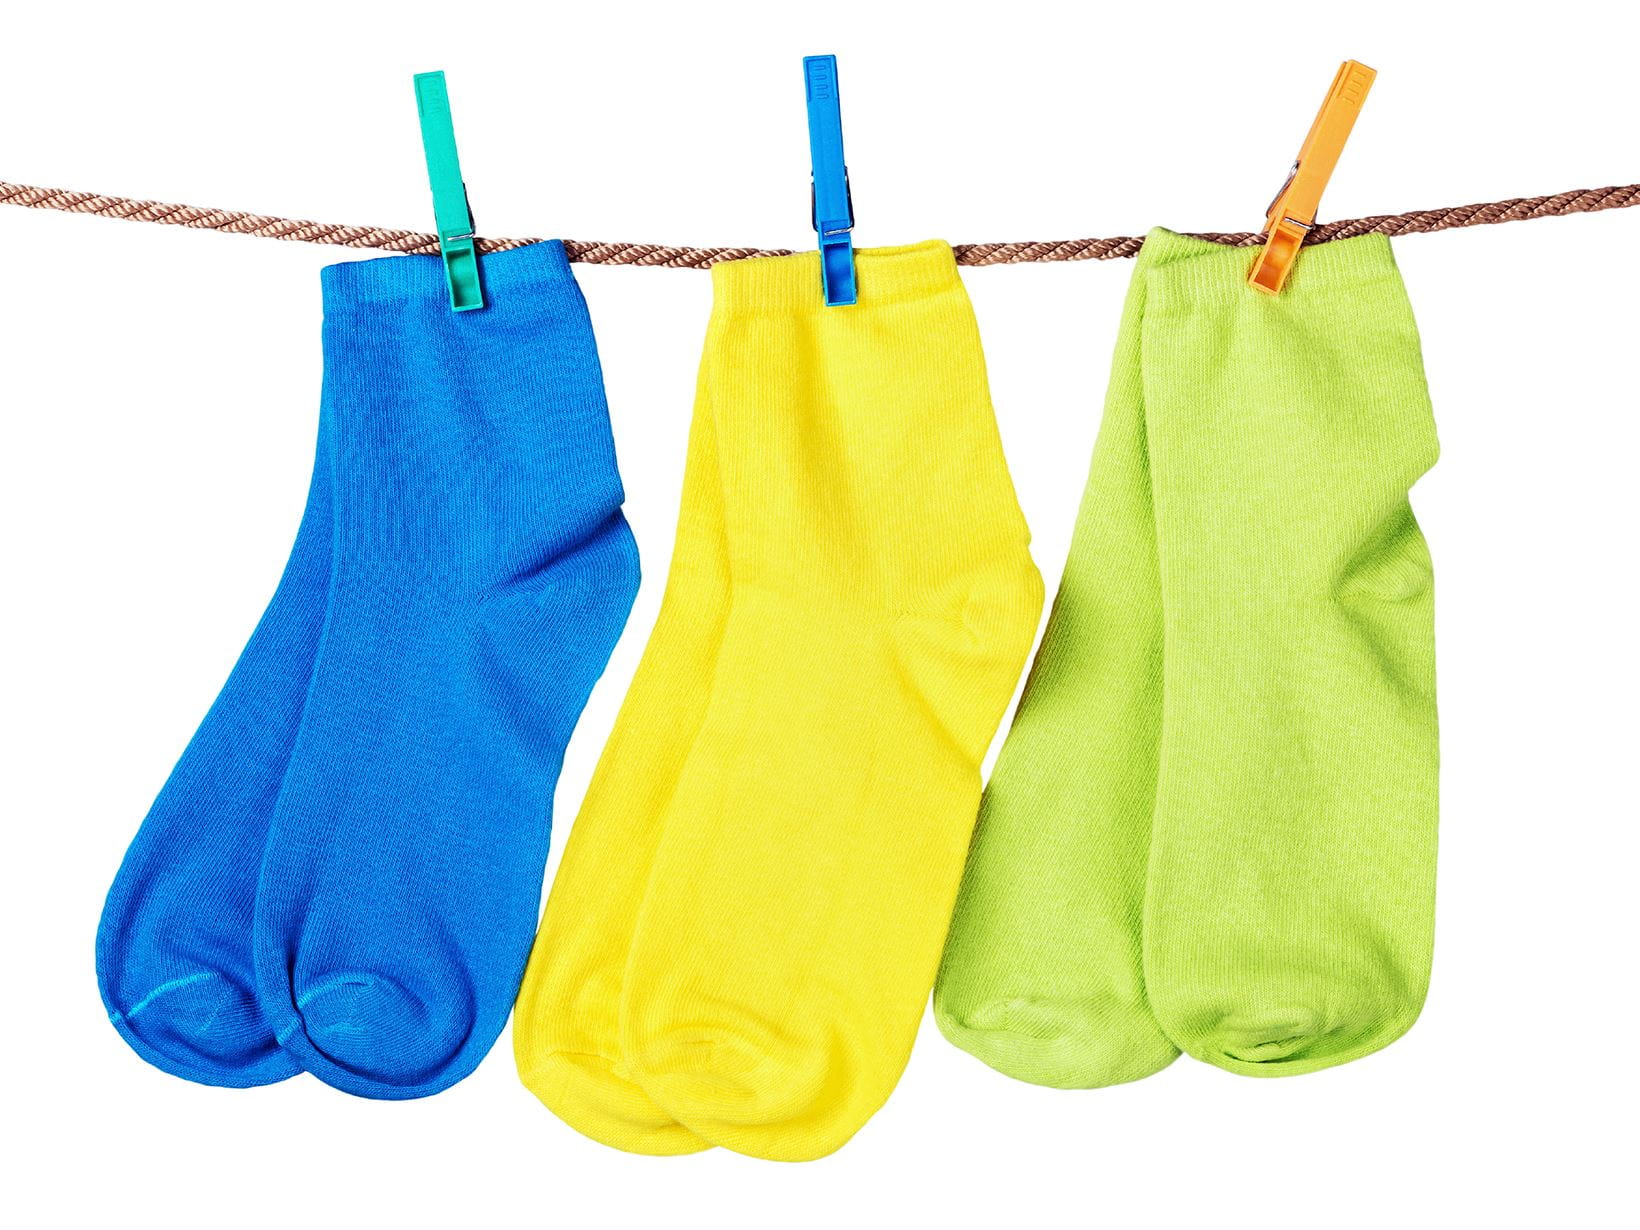 socks hanging on a washing line